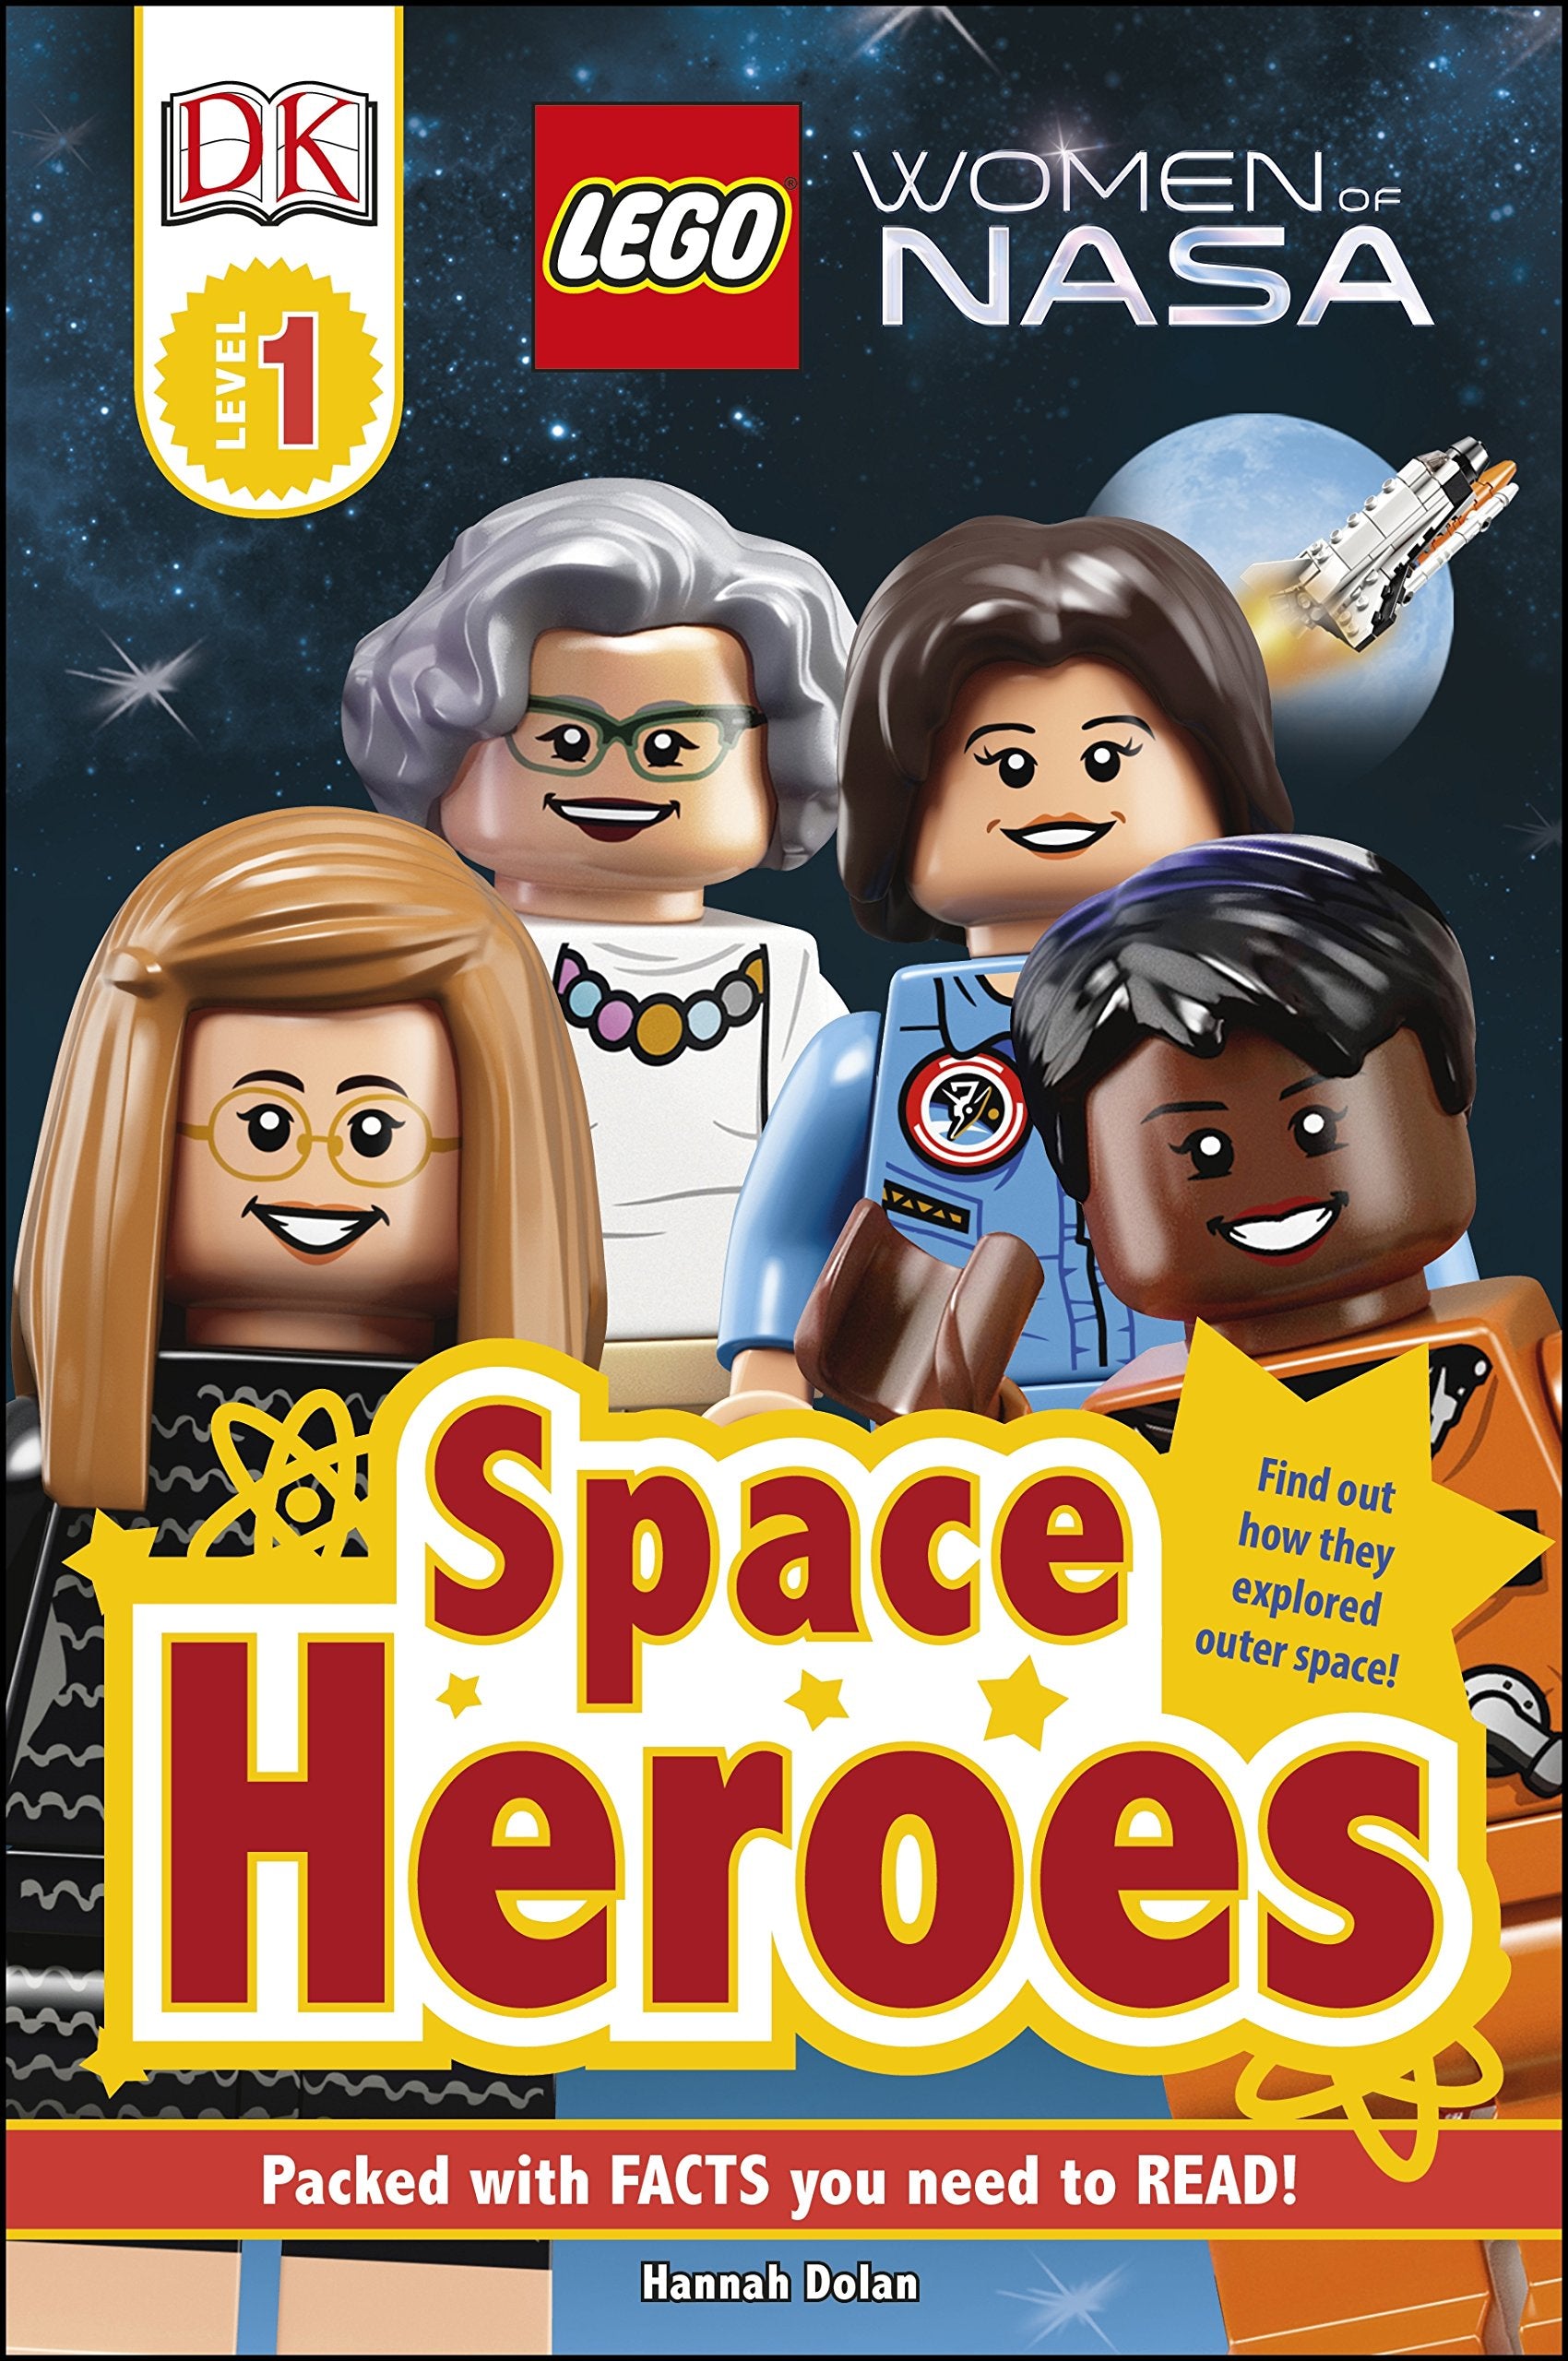 LEGO Women of NASA Space Heroes (DK Readers Level 1)